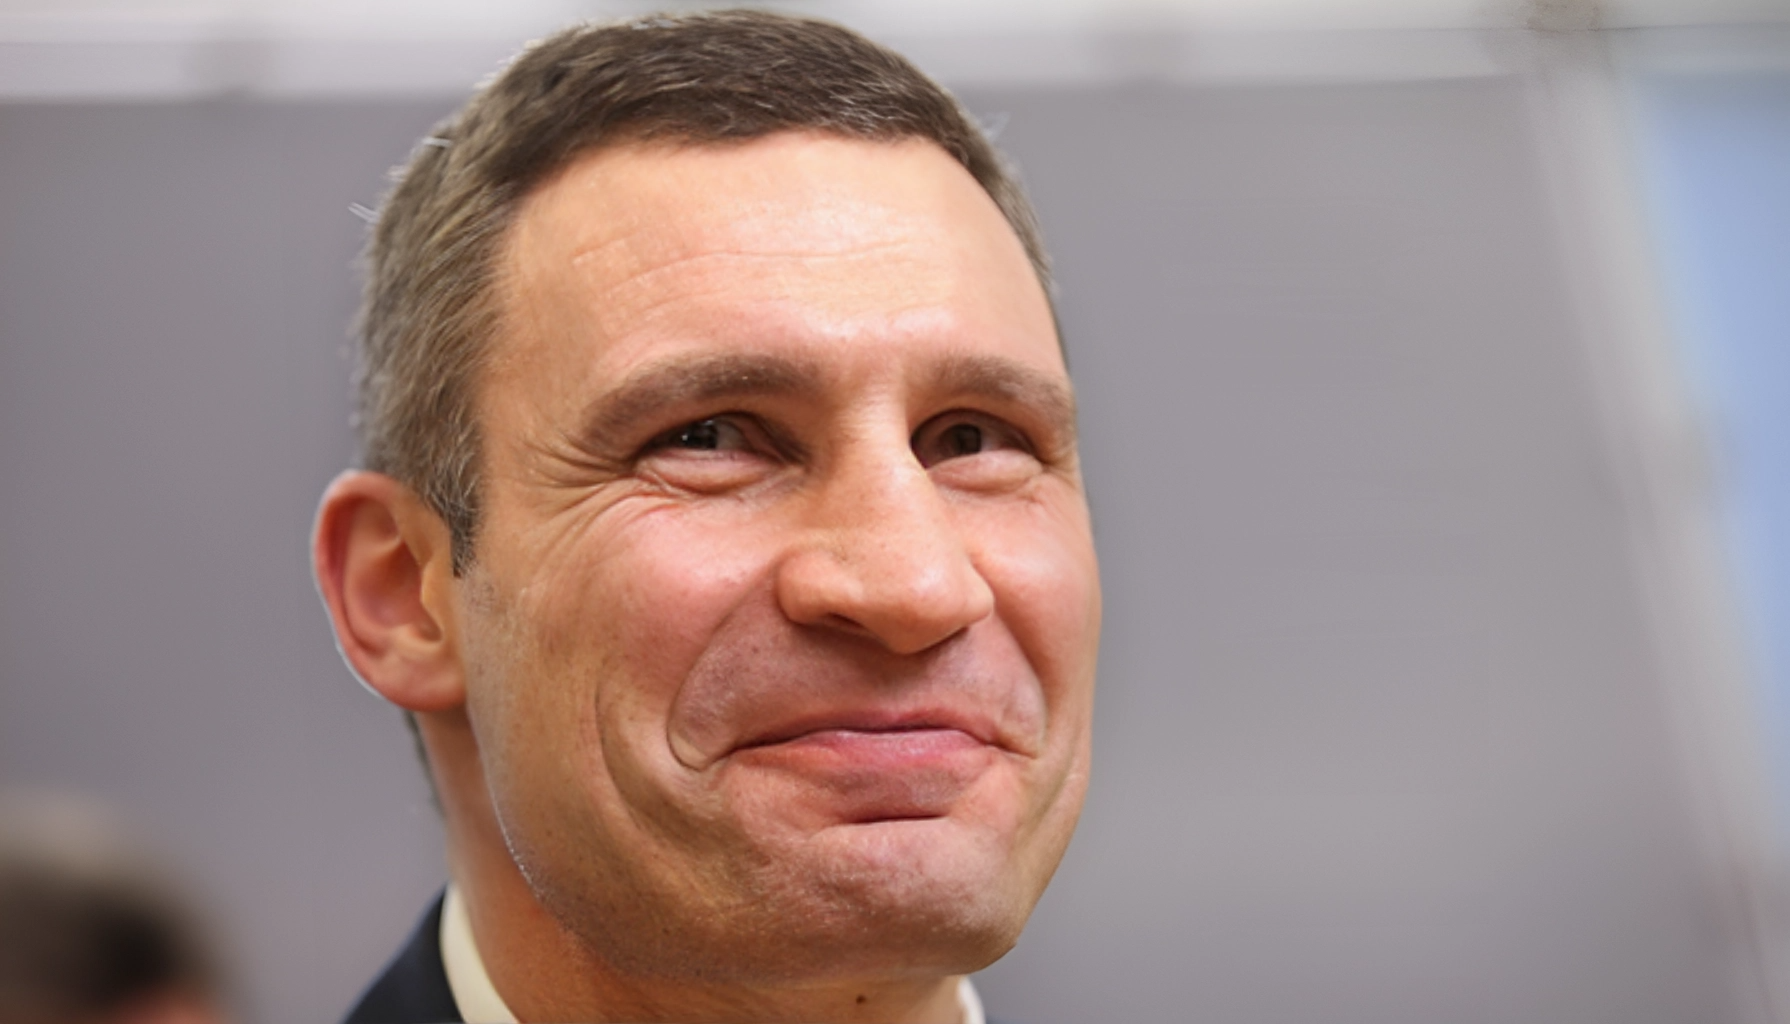 Vitali Klitschko smiles